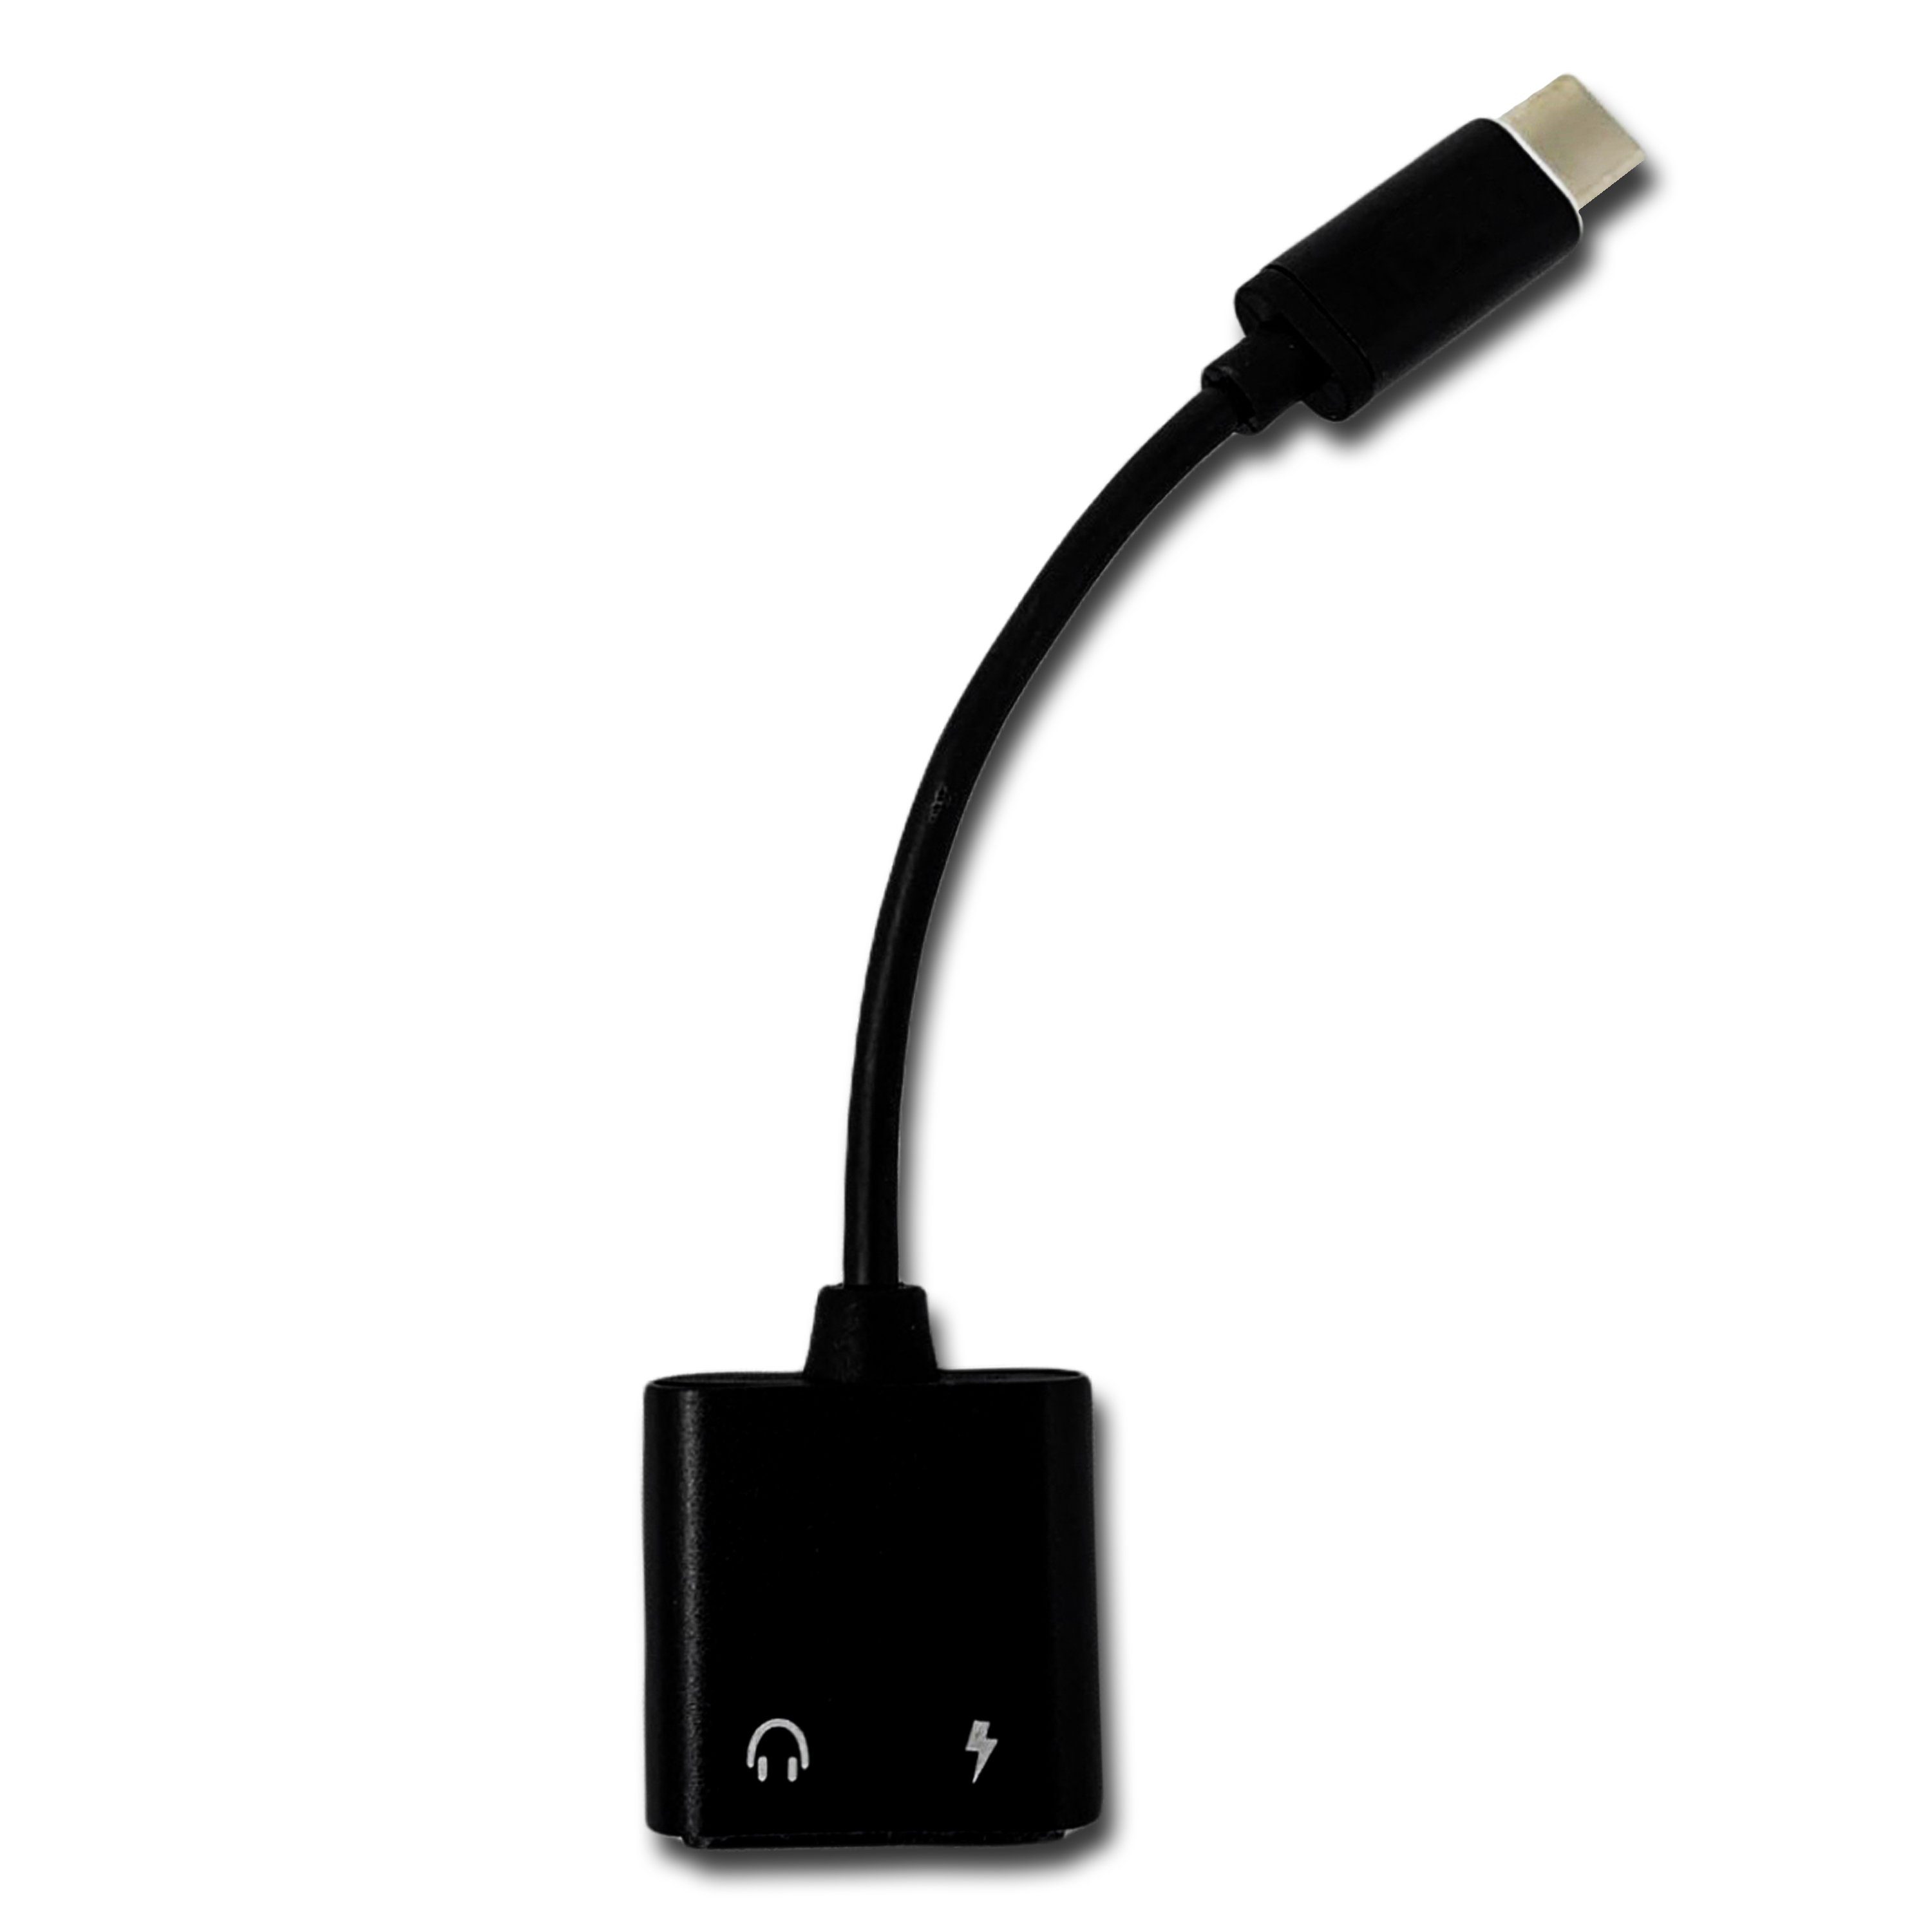 H-basics »USB-C auf 3.5mm & USB-C Adapter - USB C auf 3.5mm Klinke Adapter,  Samsung S21/S21 Ultra/S20/S20 Ultra/Note20,Huawei P40/P30,Mate30/20,Xiaomi 6/8«  Adapter online kaufen | OTTO